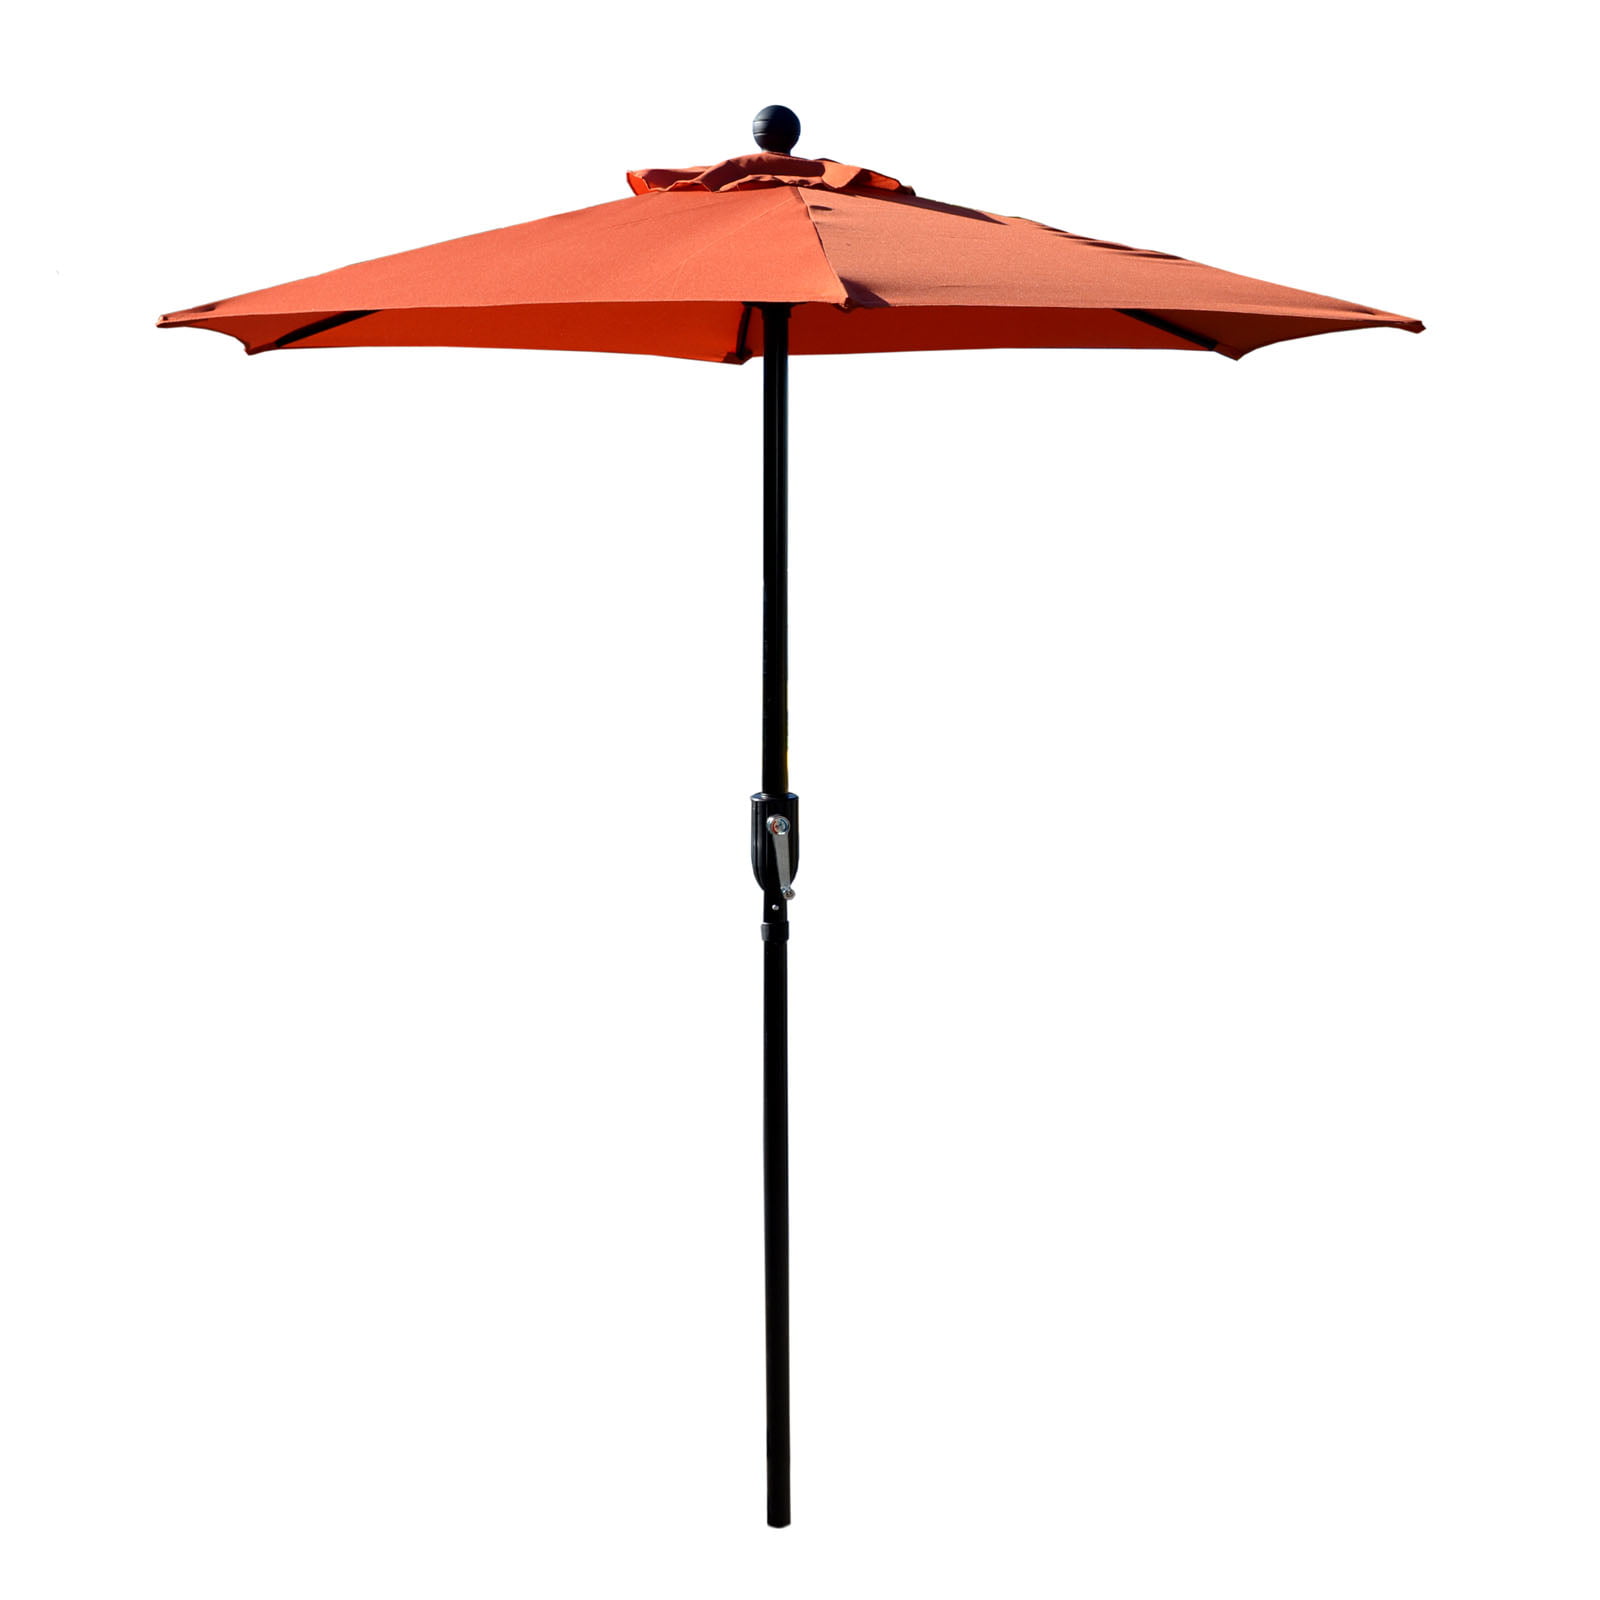 Patio Umbrella Outdoor Table Umbrella with 6 Sturdy Ribs and Crank 6.5 ft, Orange Umbrella ...